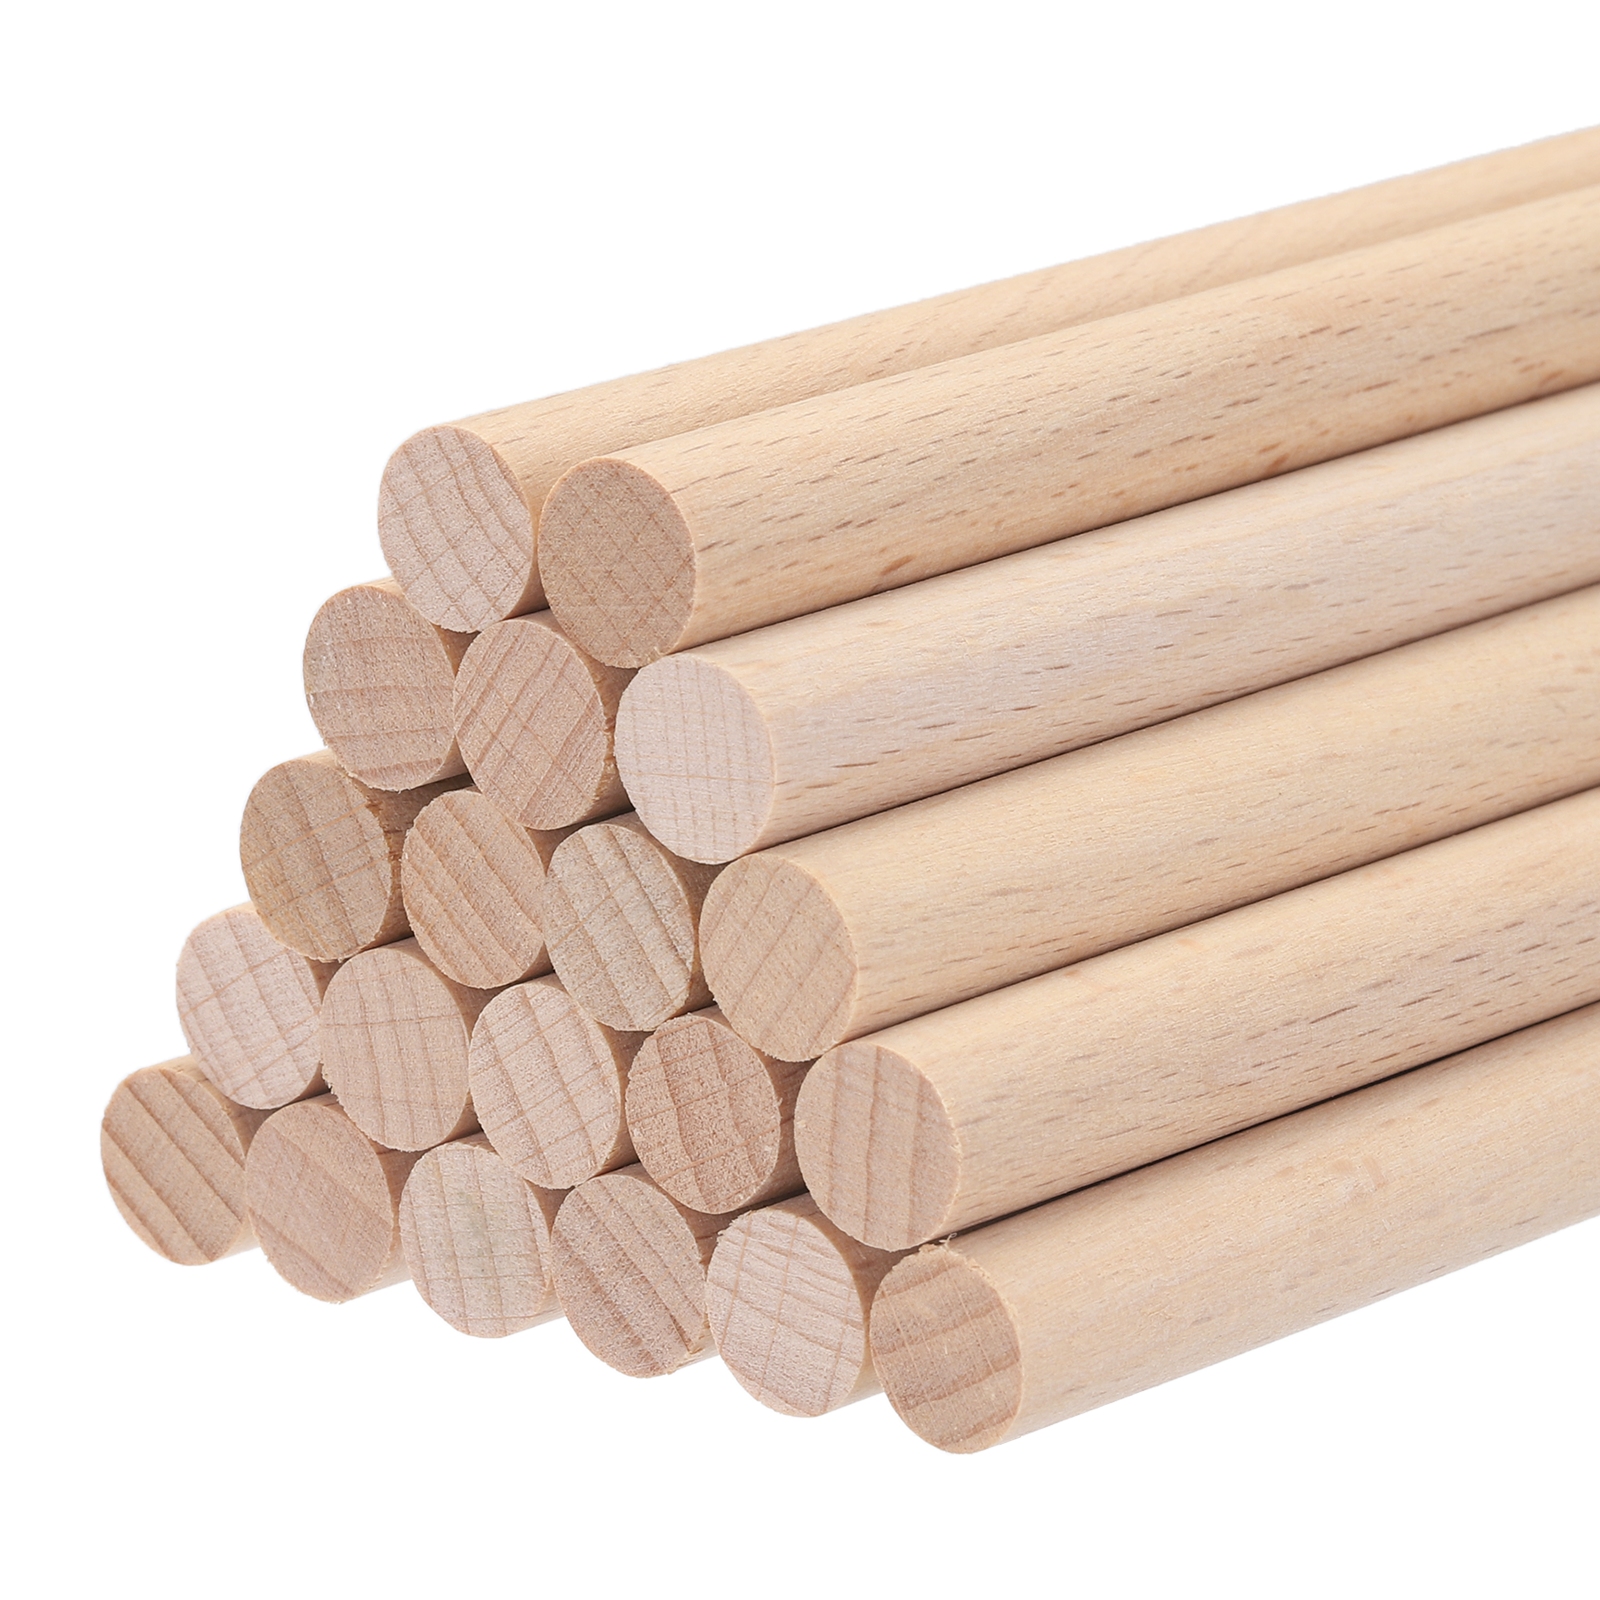 Wooden Dowel Rods Wood Sticks, 12x0.39 Round Wooden Dowels Rod for DIY,  Arts Decoration, Crafts Wand, 20pcs 